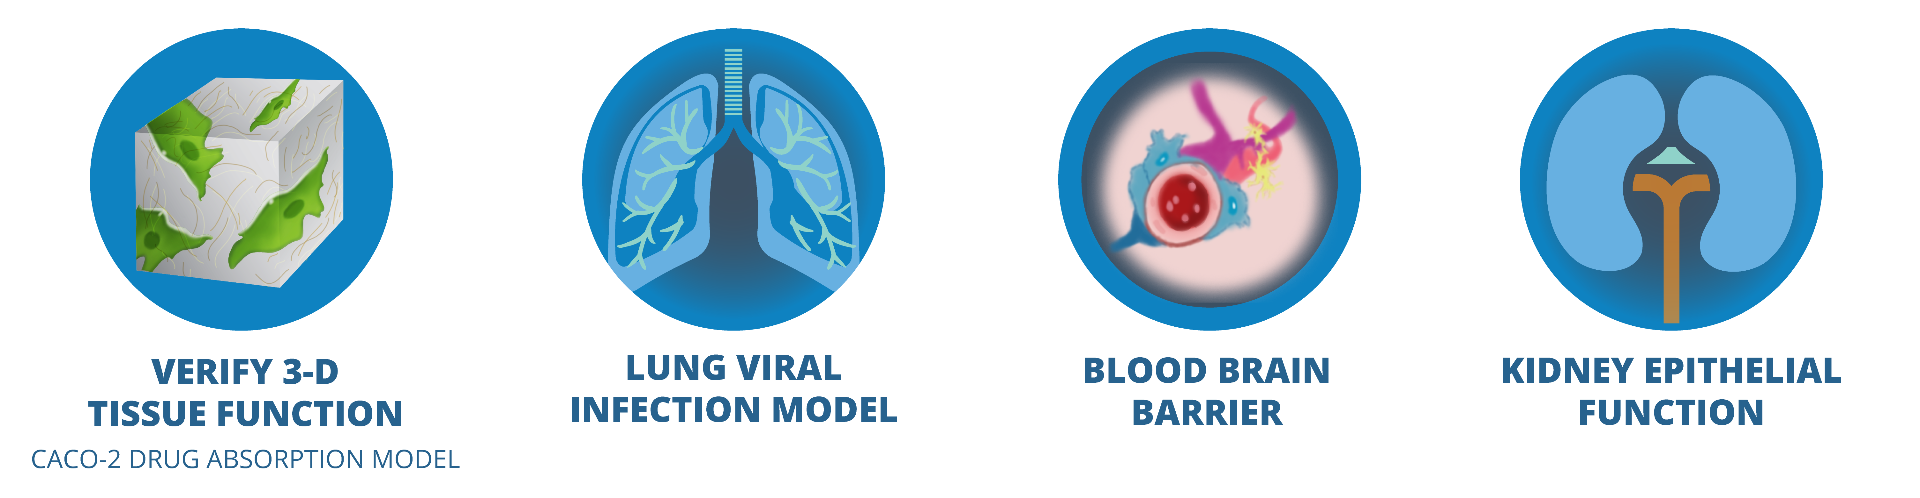 EVOM3 Emerging Application Fields, Verify 3d tissue function, Caco-2 Drug absorption model, blood brain barrier, kidney epithelial transport